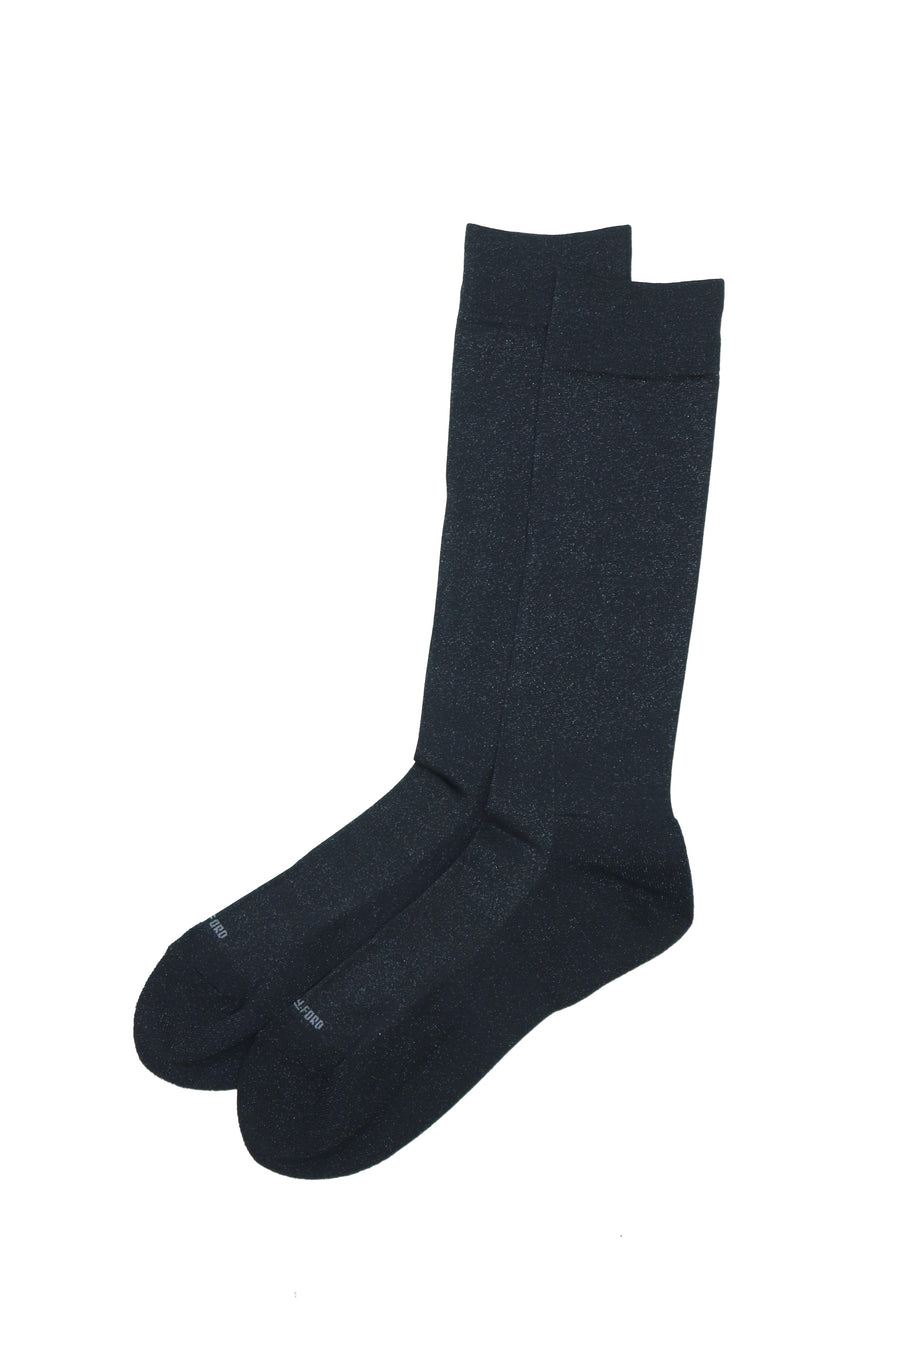 BED j.w. FORD  Glitter Long Socks(BLACK)